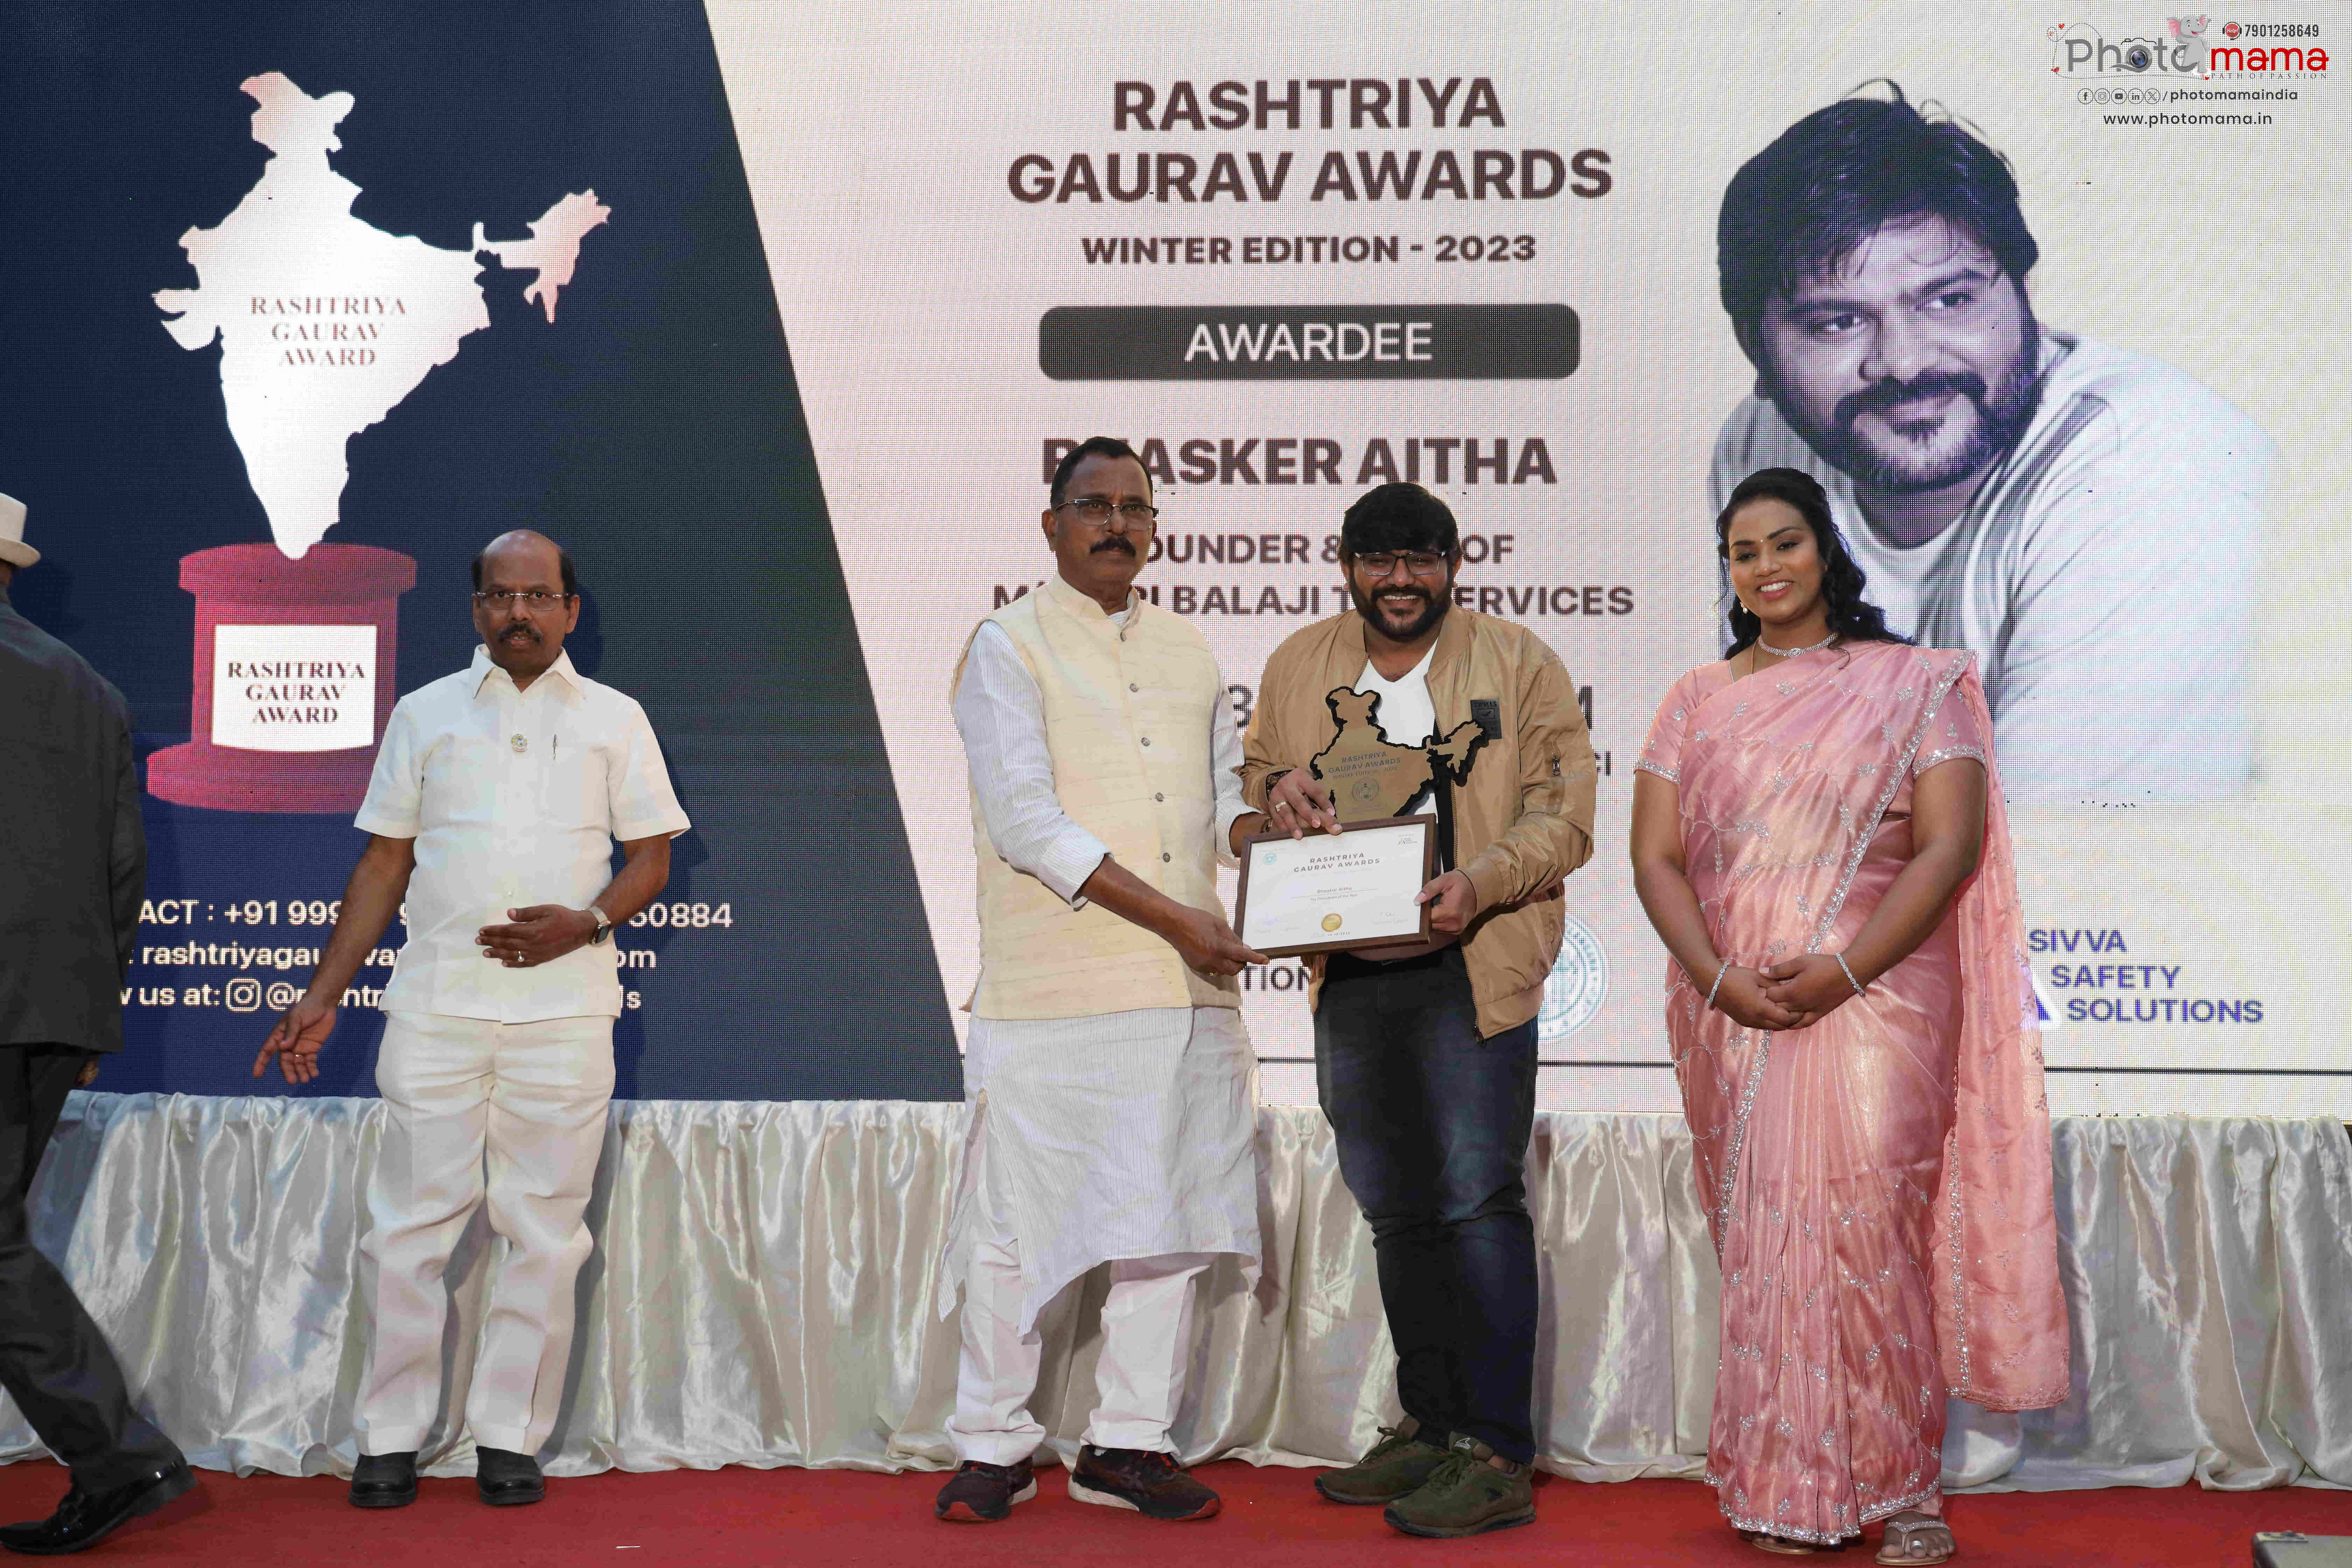 Bhaskar Aita, Founder of Sri Balaji Tax Services, Receives Rashtriya Gaurav Award for Excellence